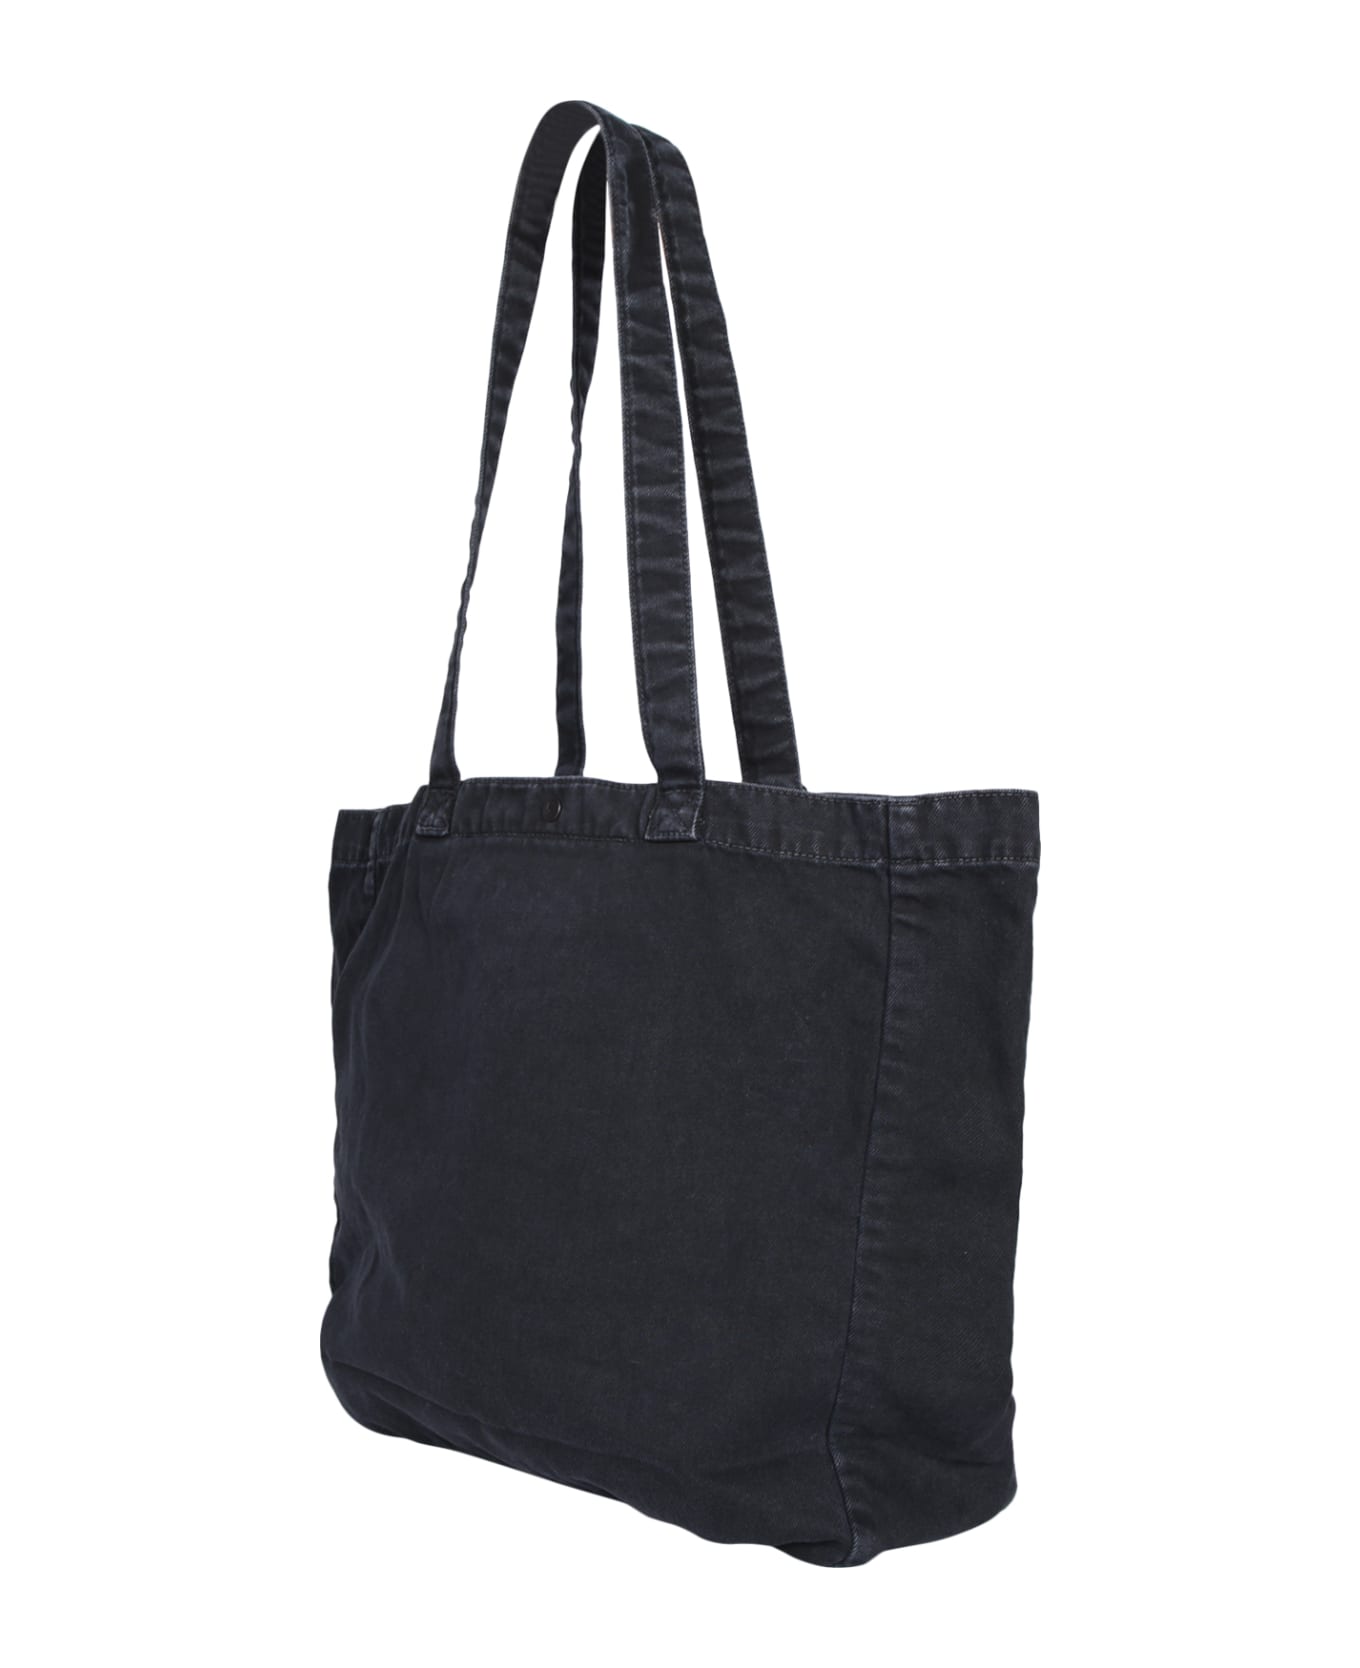 Carhartt Wip Garrison Bag Black - Black